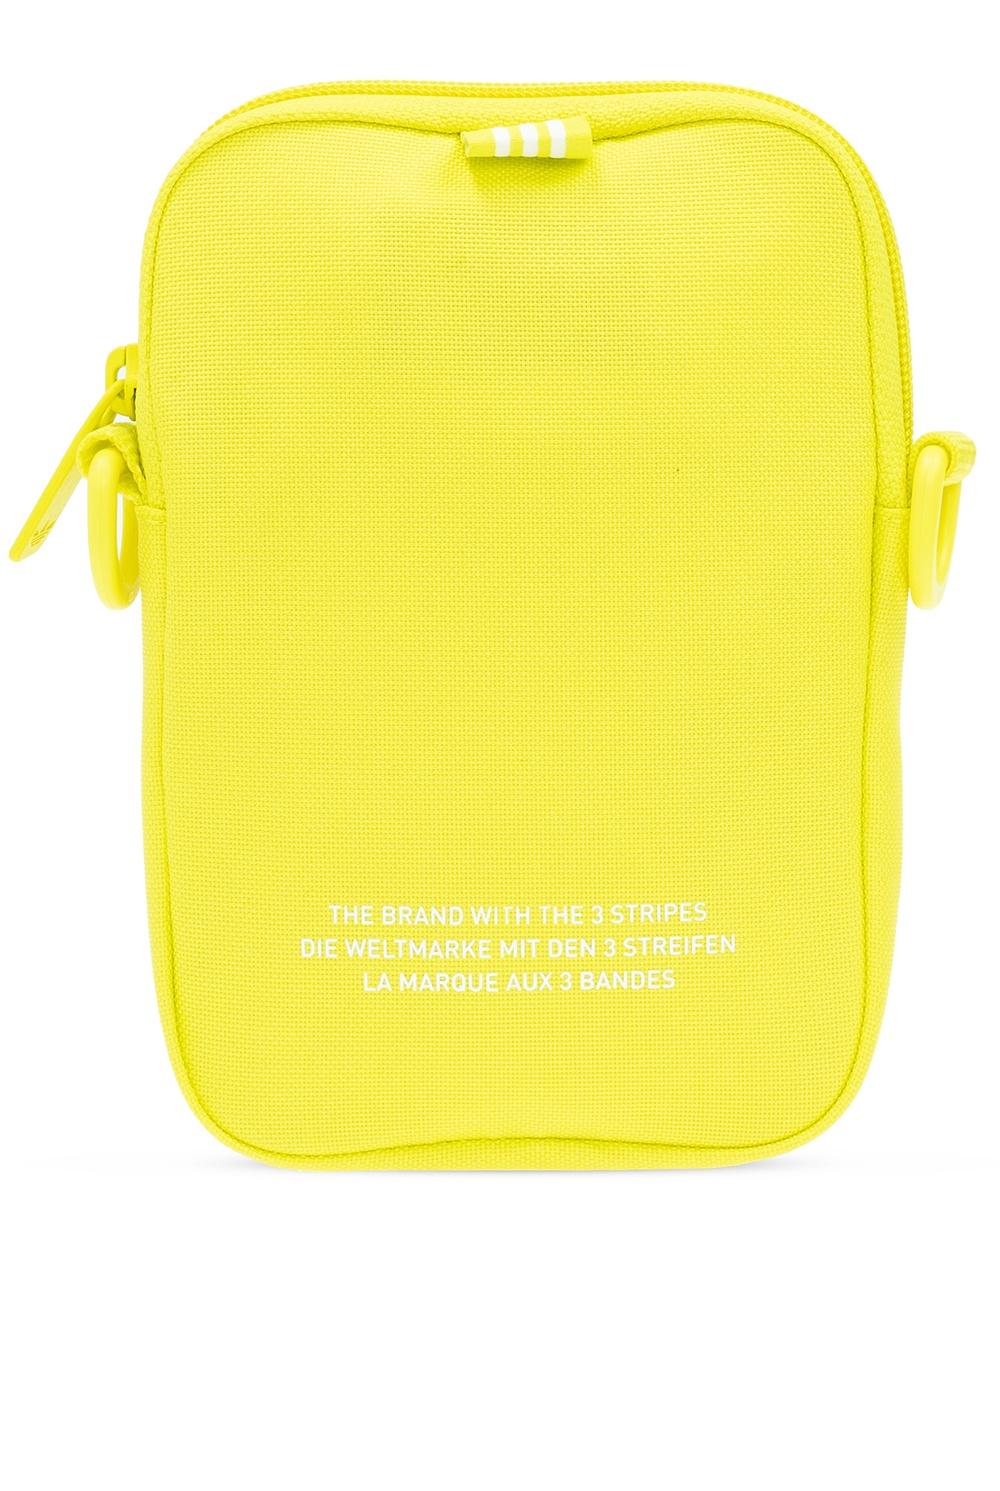 adidas Originals Shoulder Bag With Logo Yellow | Lyst